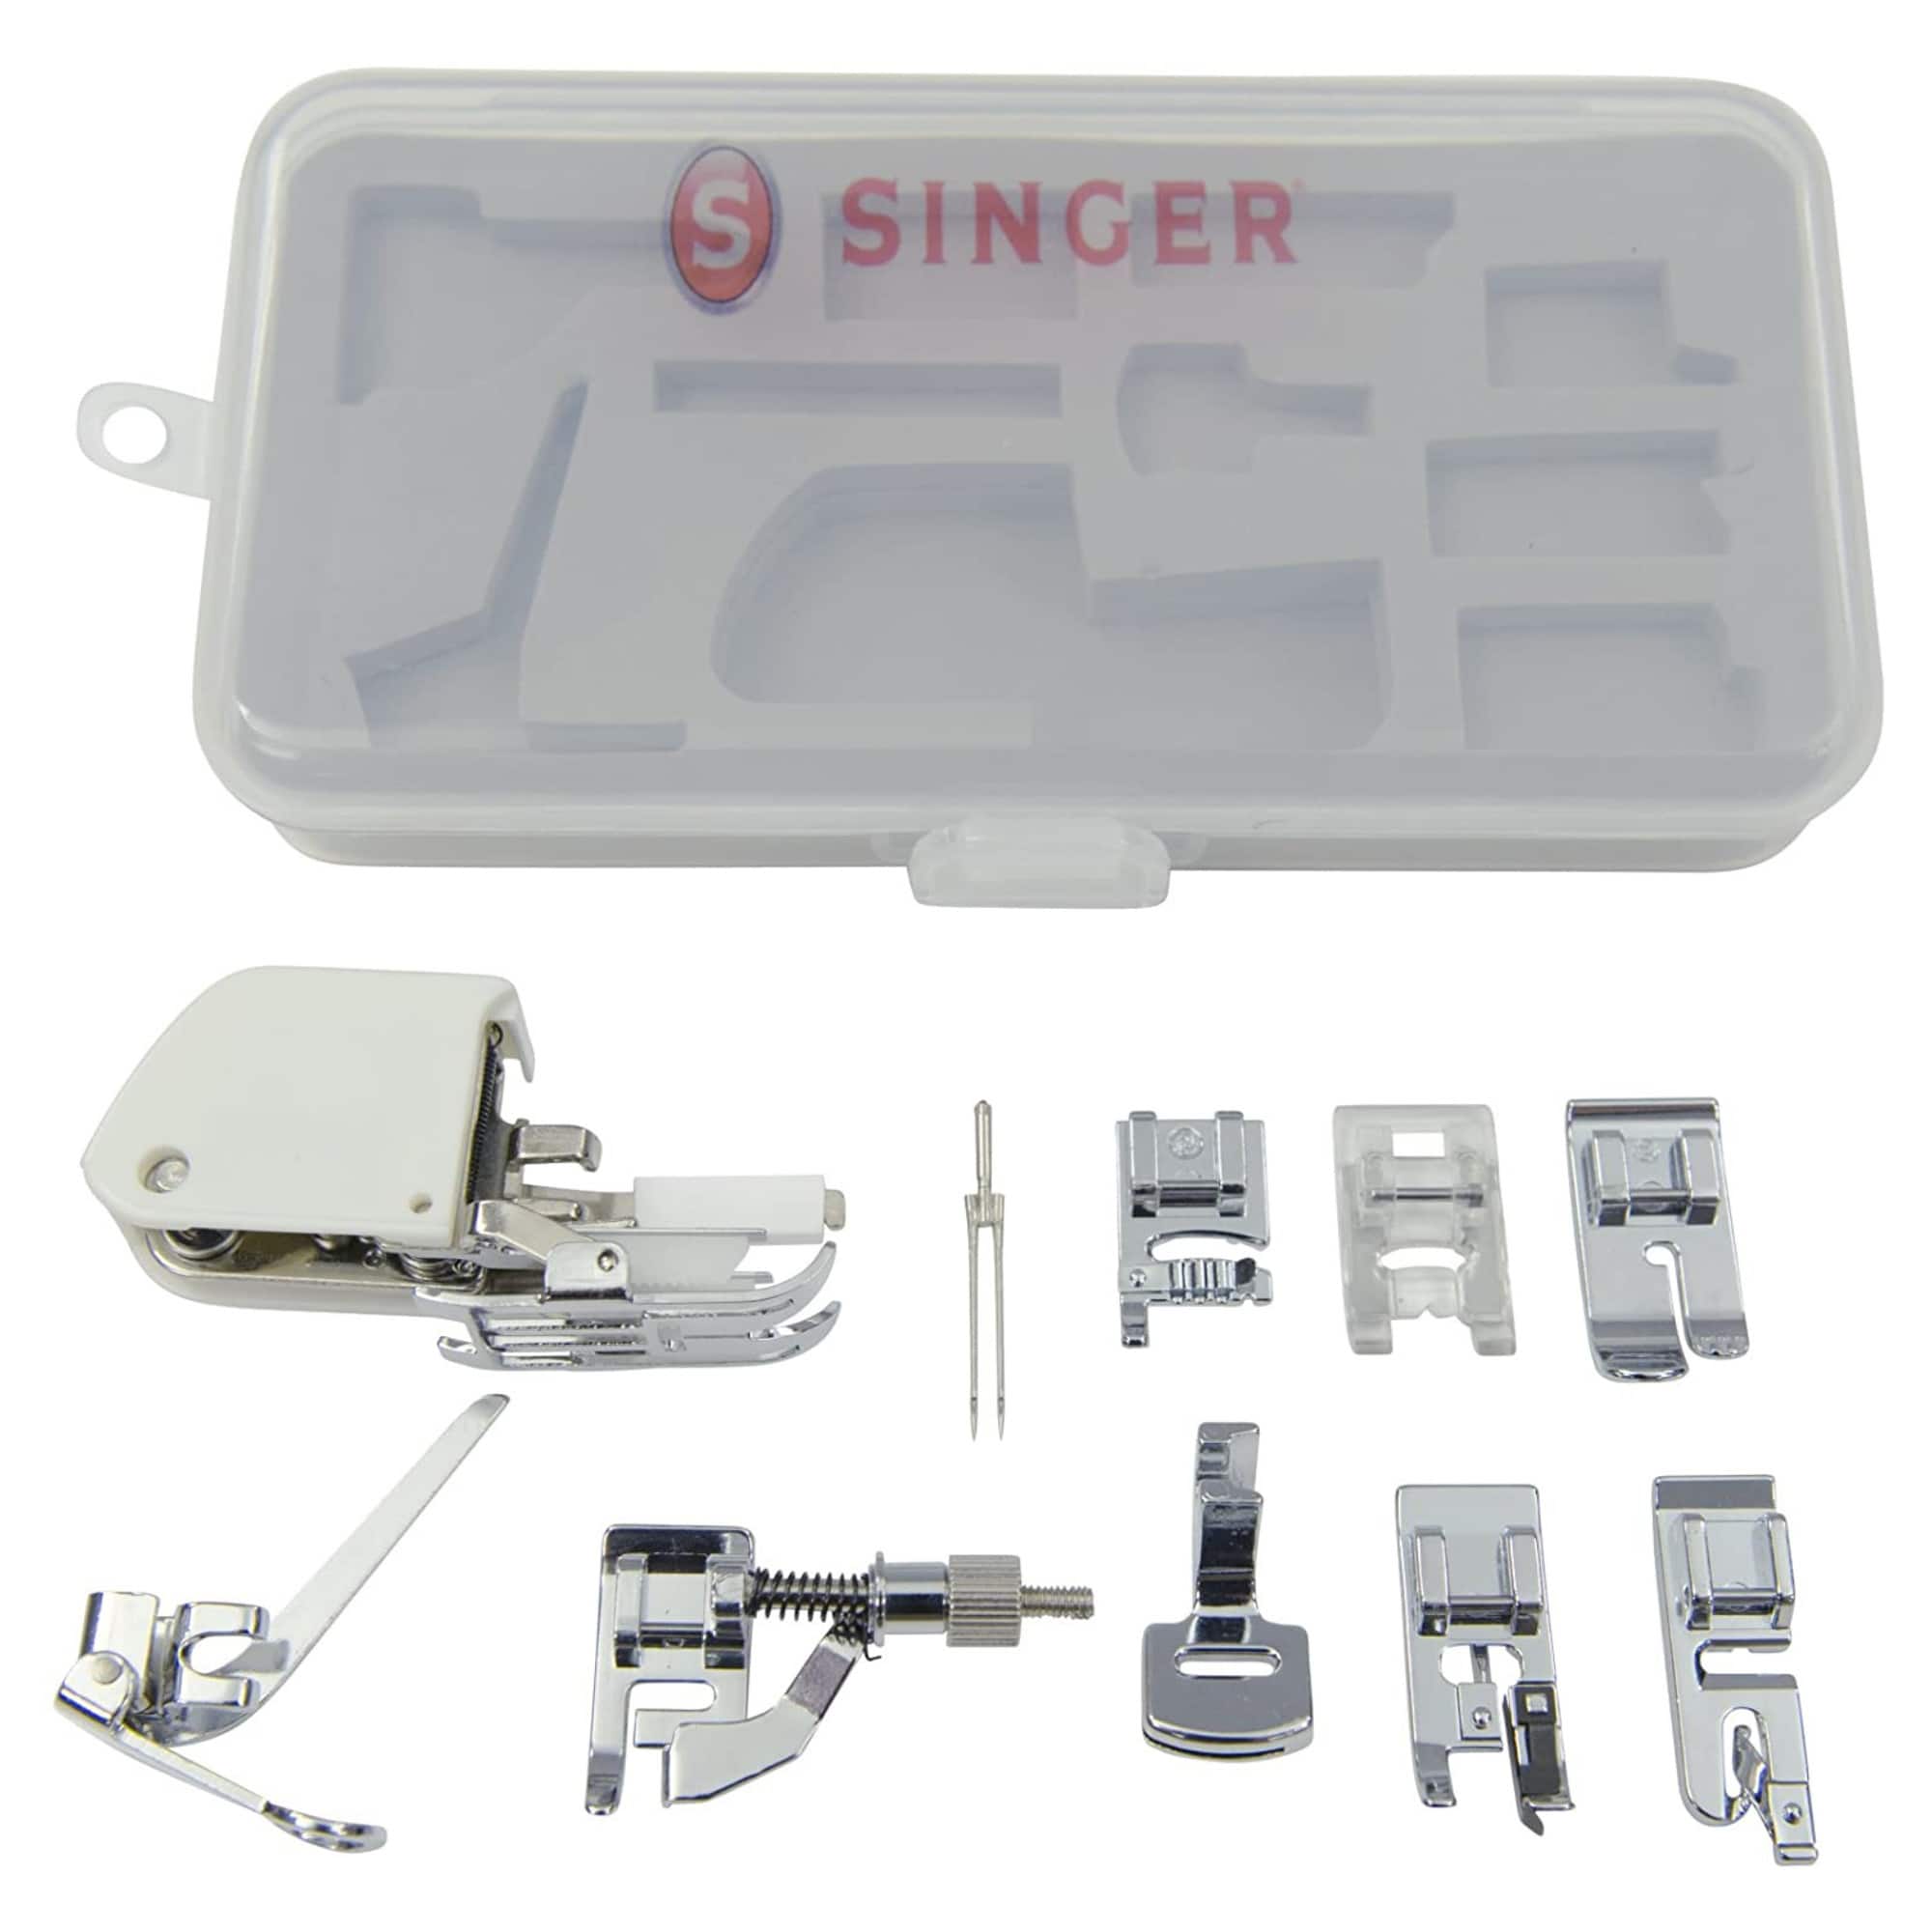 Singer Sewing Machine Presser Foot Kit